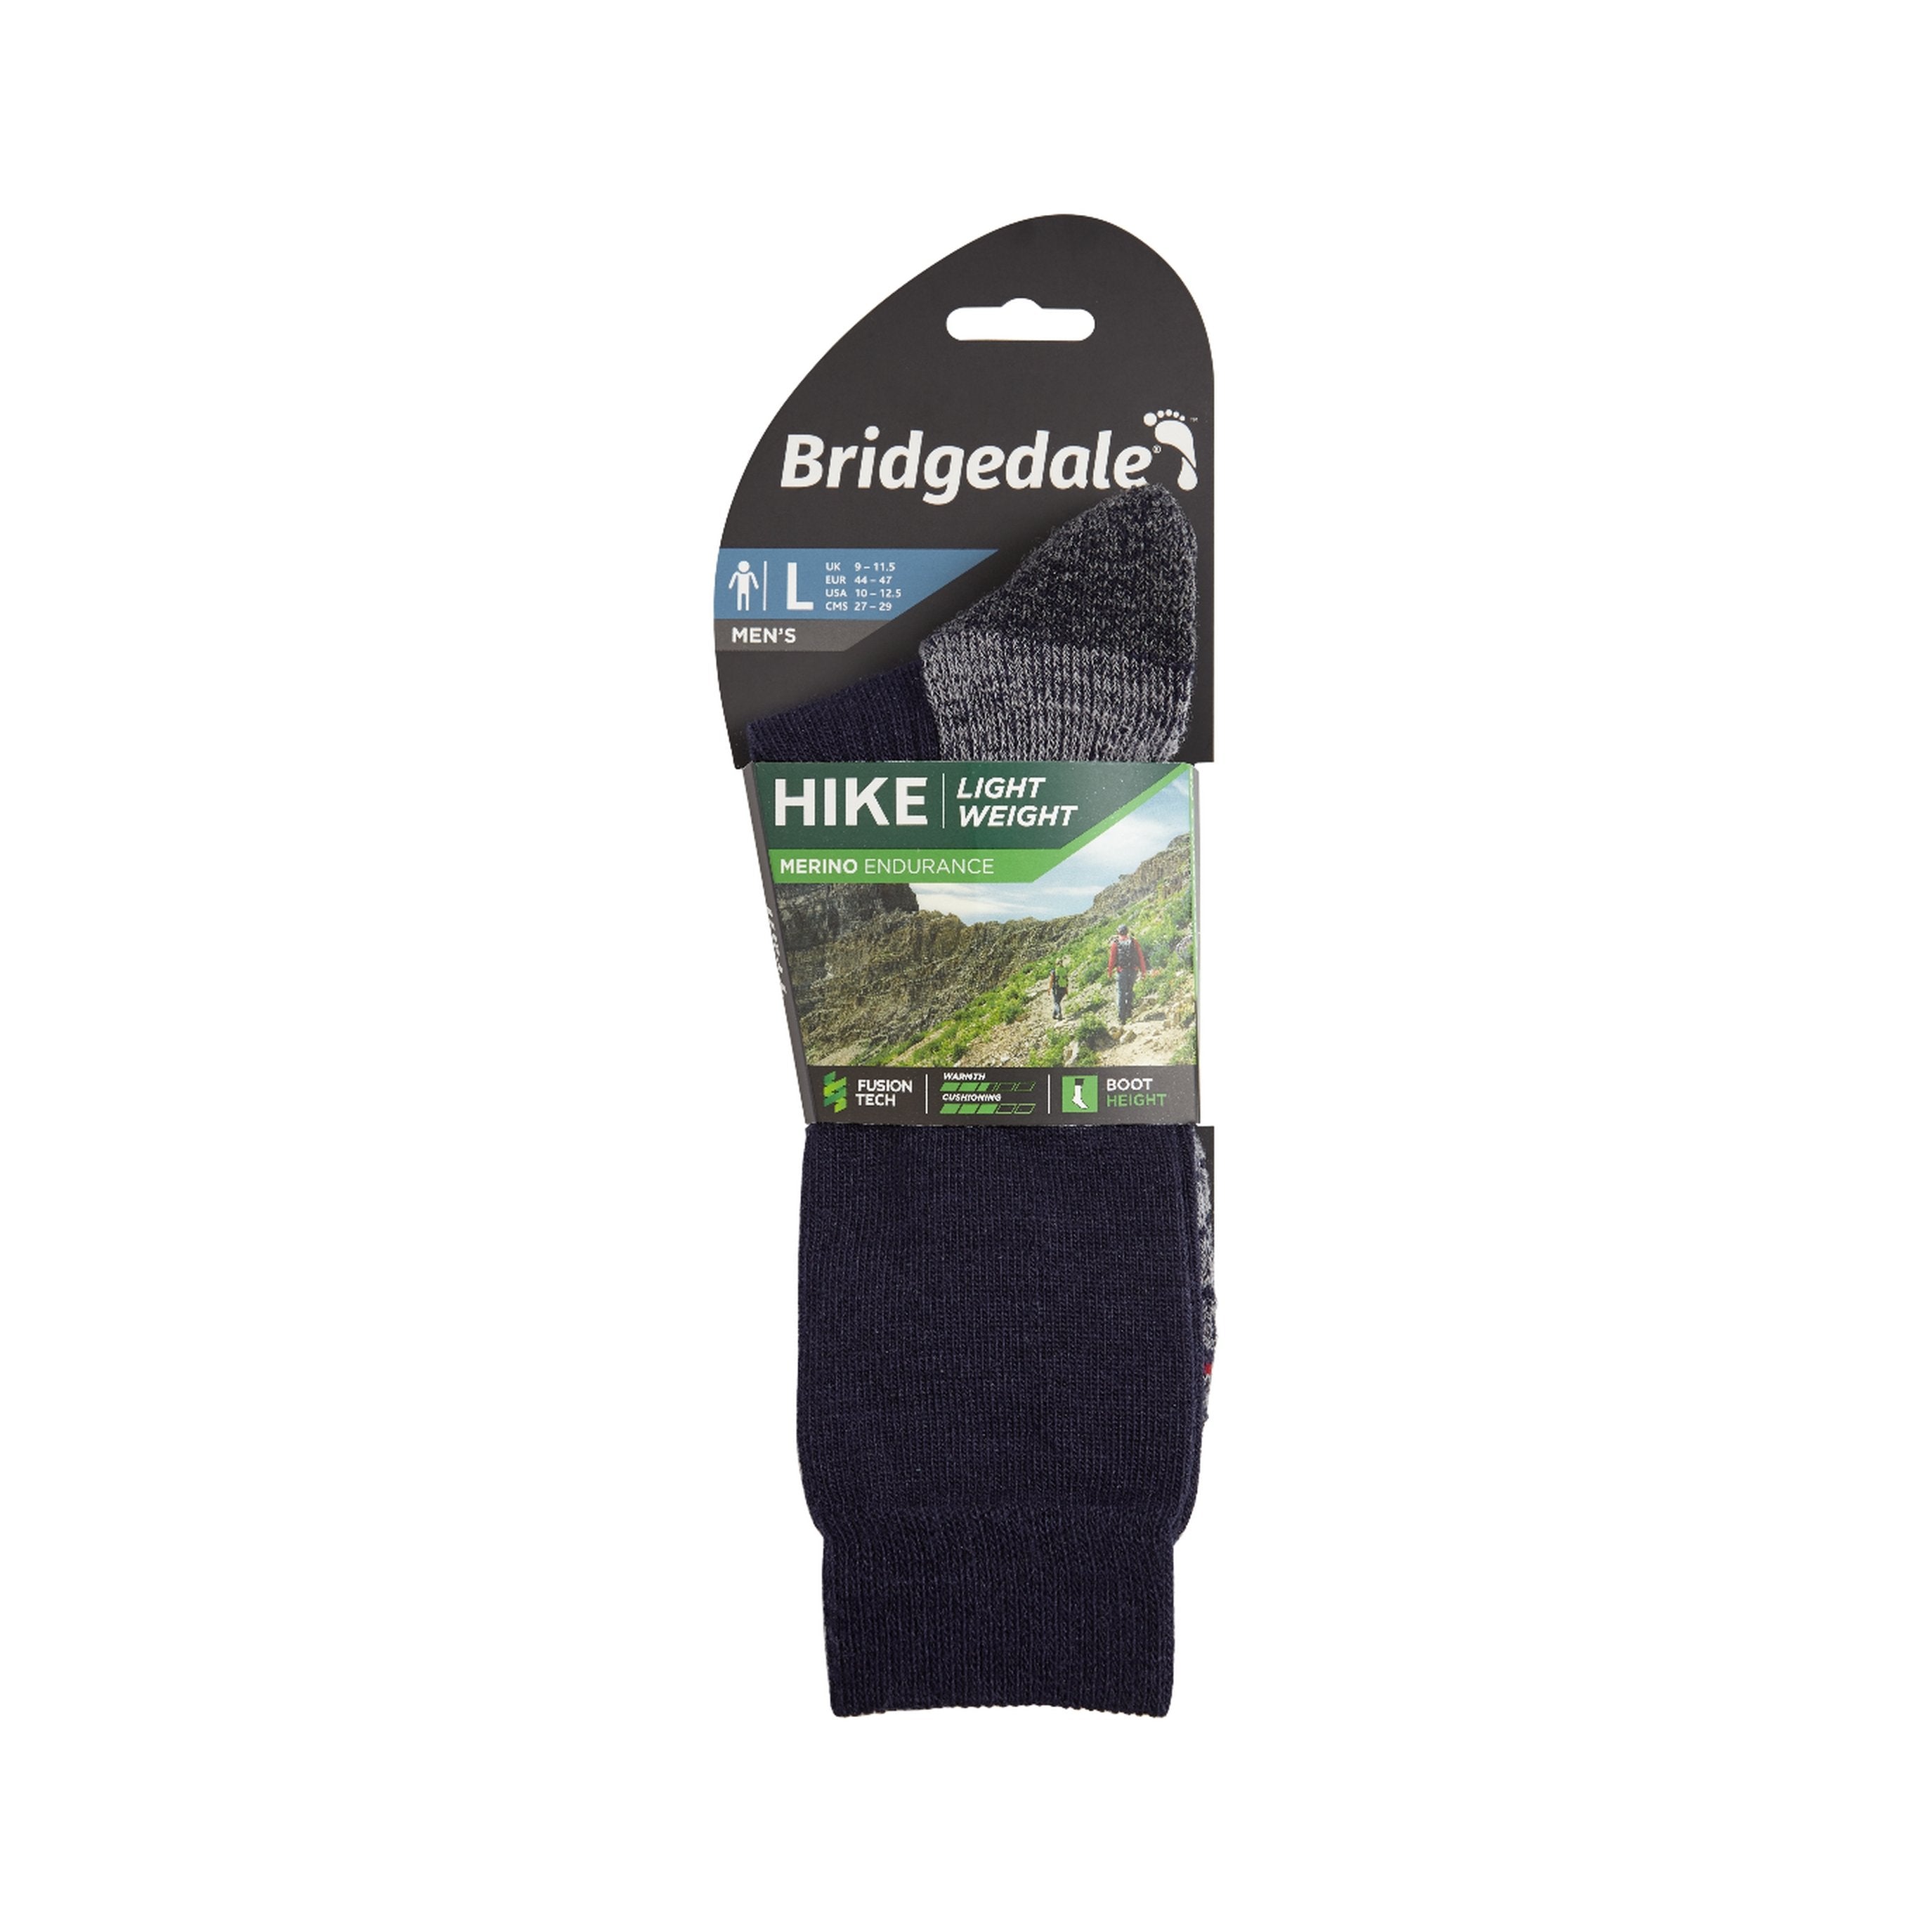 Bridgedale Hike Lightweight Performance Boot Socks (Men's) - Navy Grey - Find Your Feet Australia Hobart Launceston Tasmania